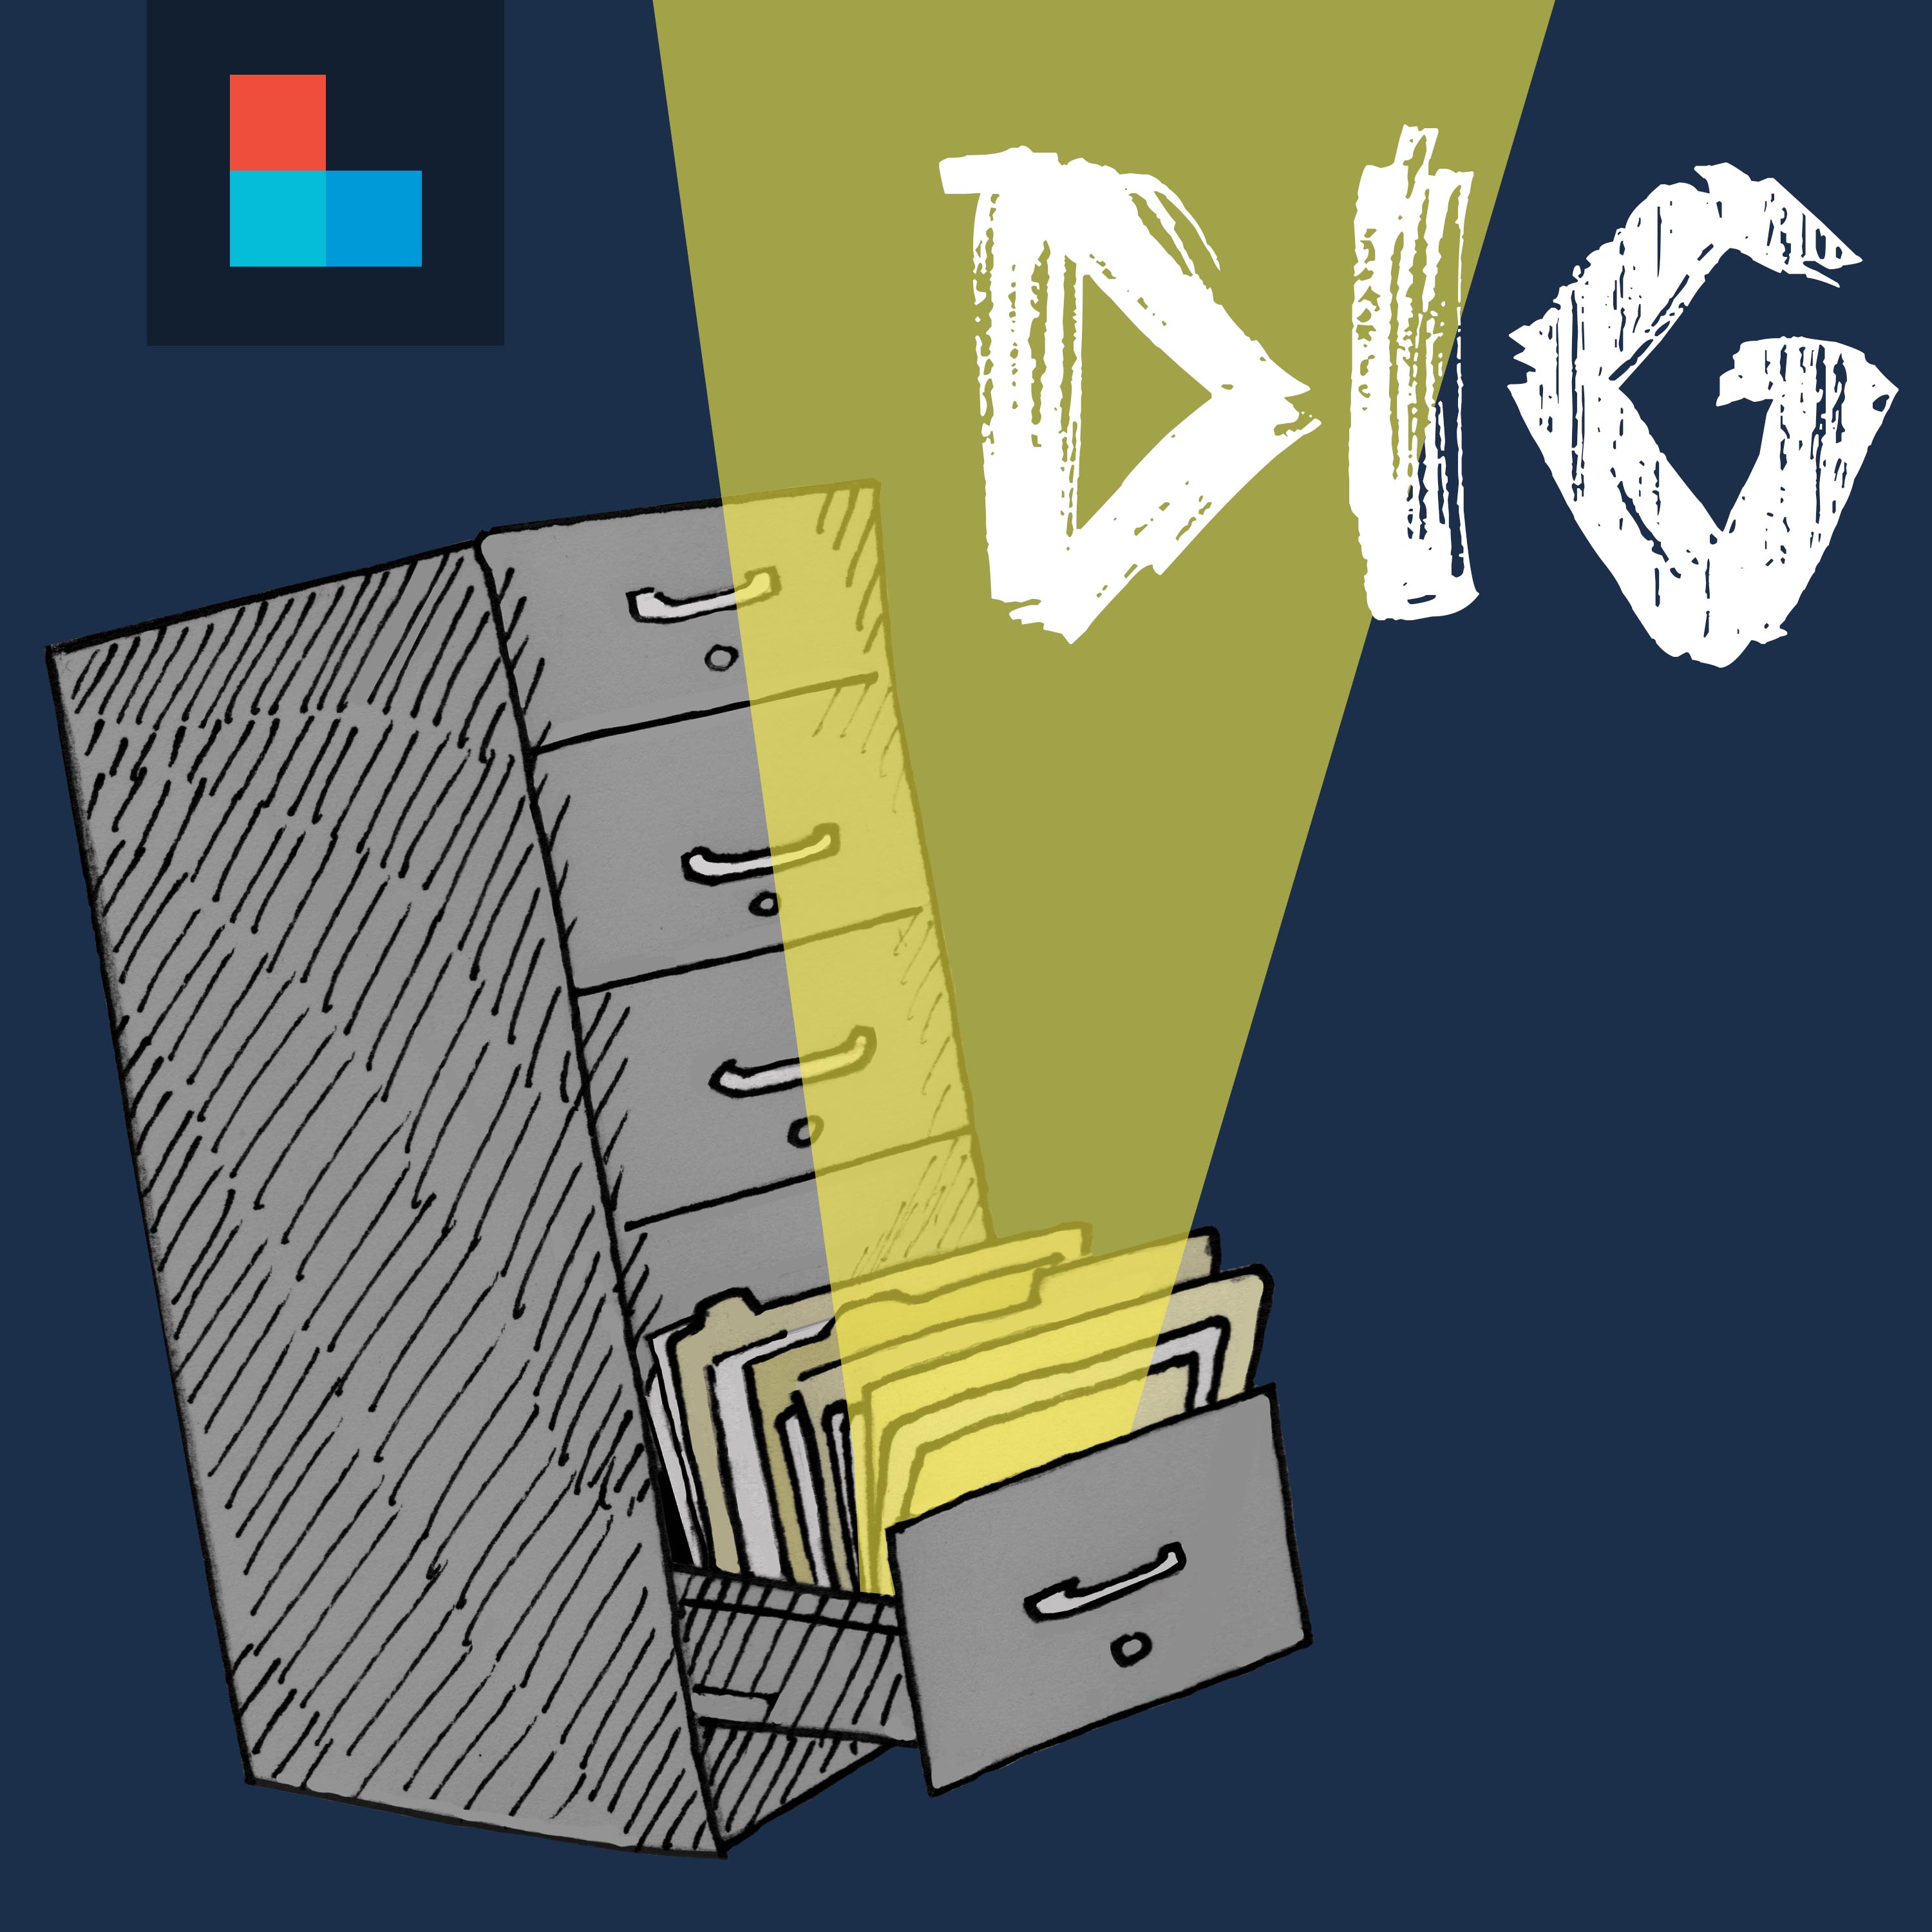 Dig podcast show image